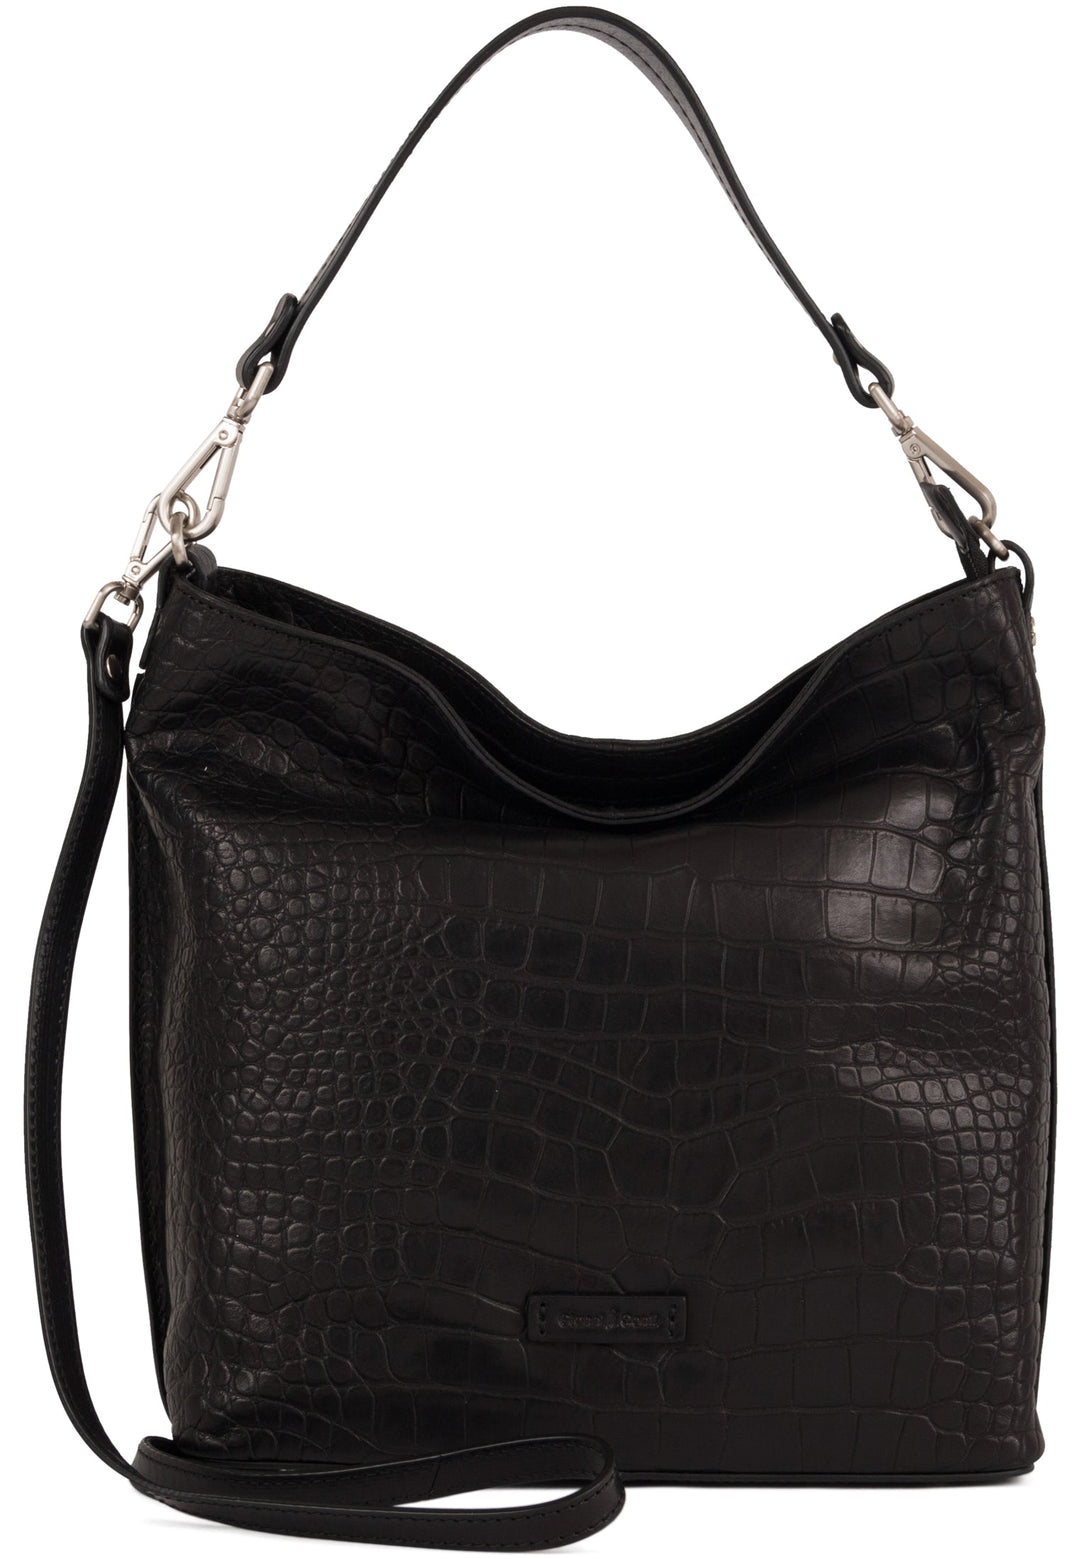 Black leather handbag with crocodile pattern and shoulder straps